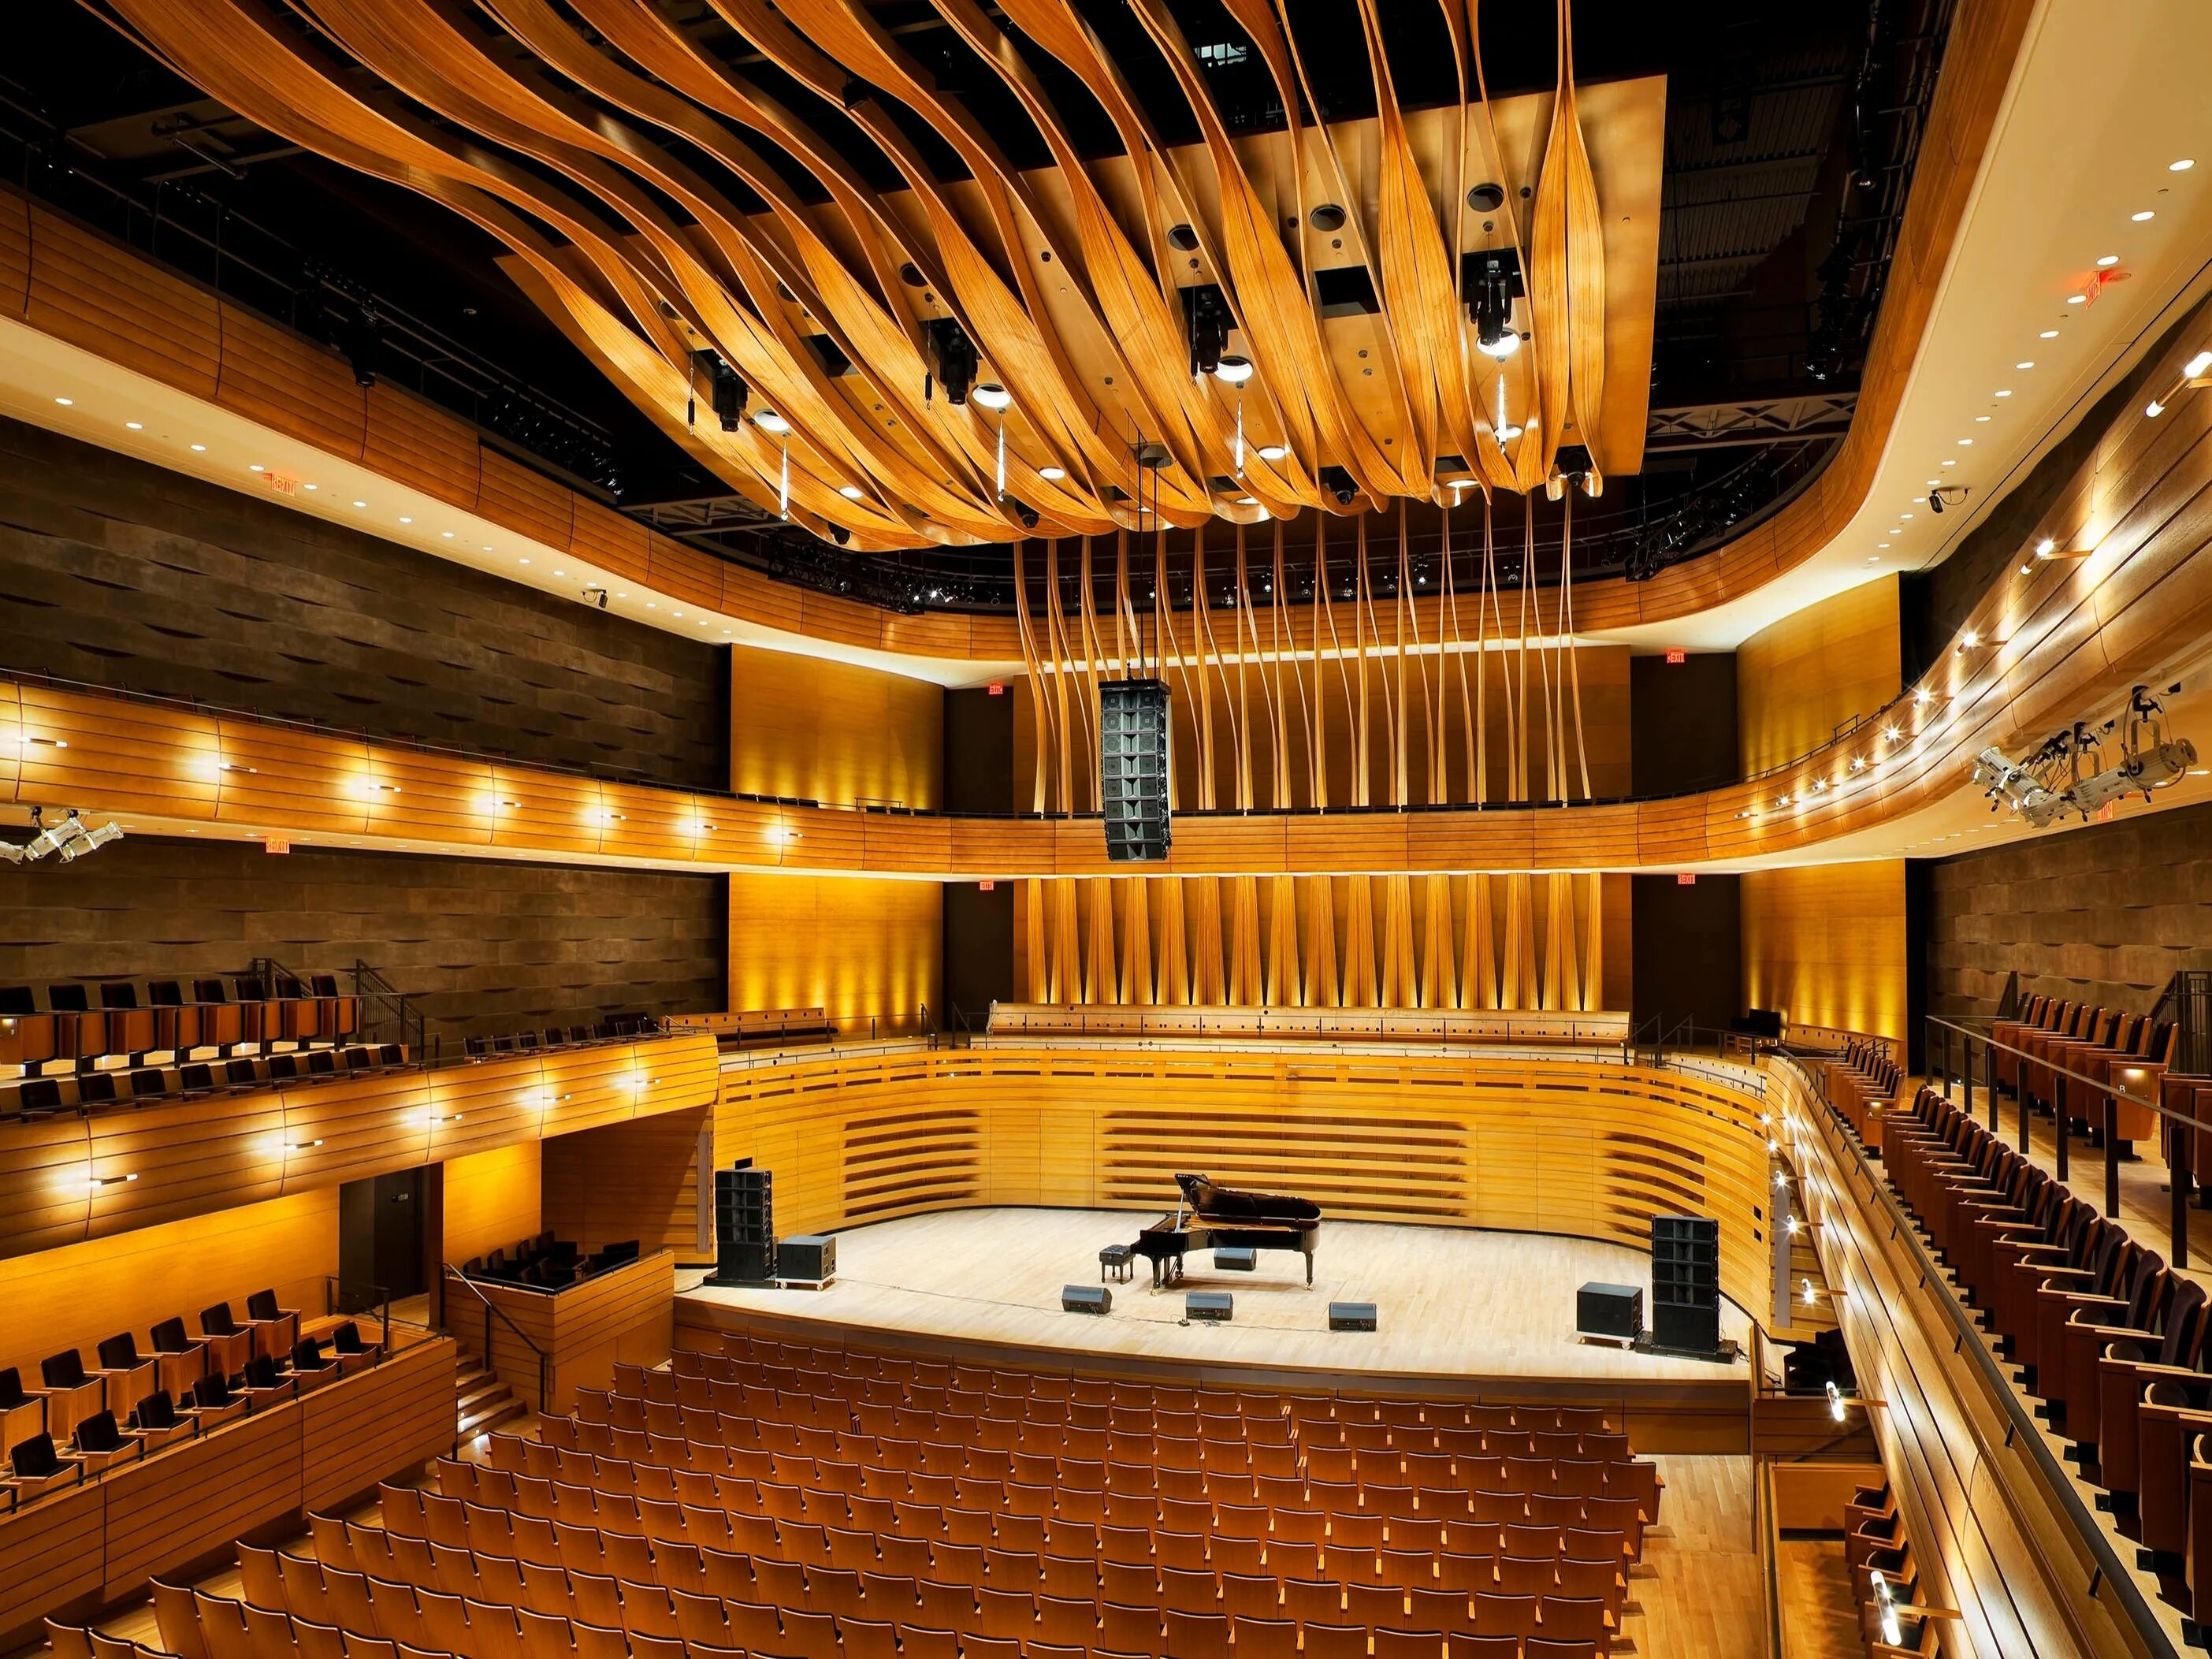 25 концертных залов. Koerner Hall, Royal Conservatory of Music зал. Концертный зал Торонто. Королевская музыкальная консерватория Торонто. Концертный зал Concert Hall.